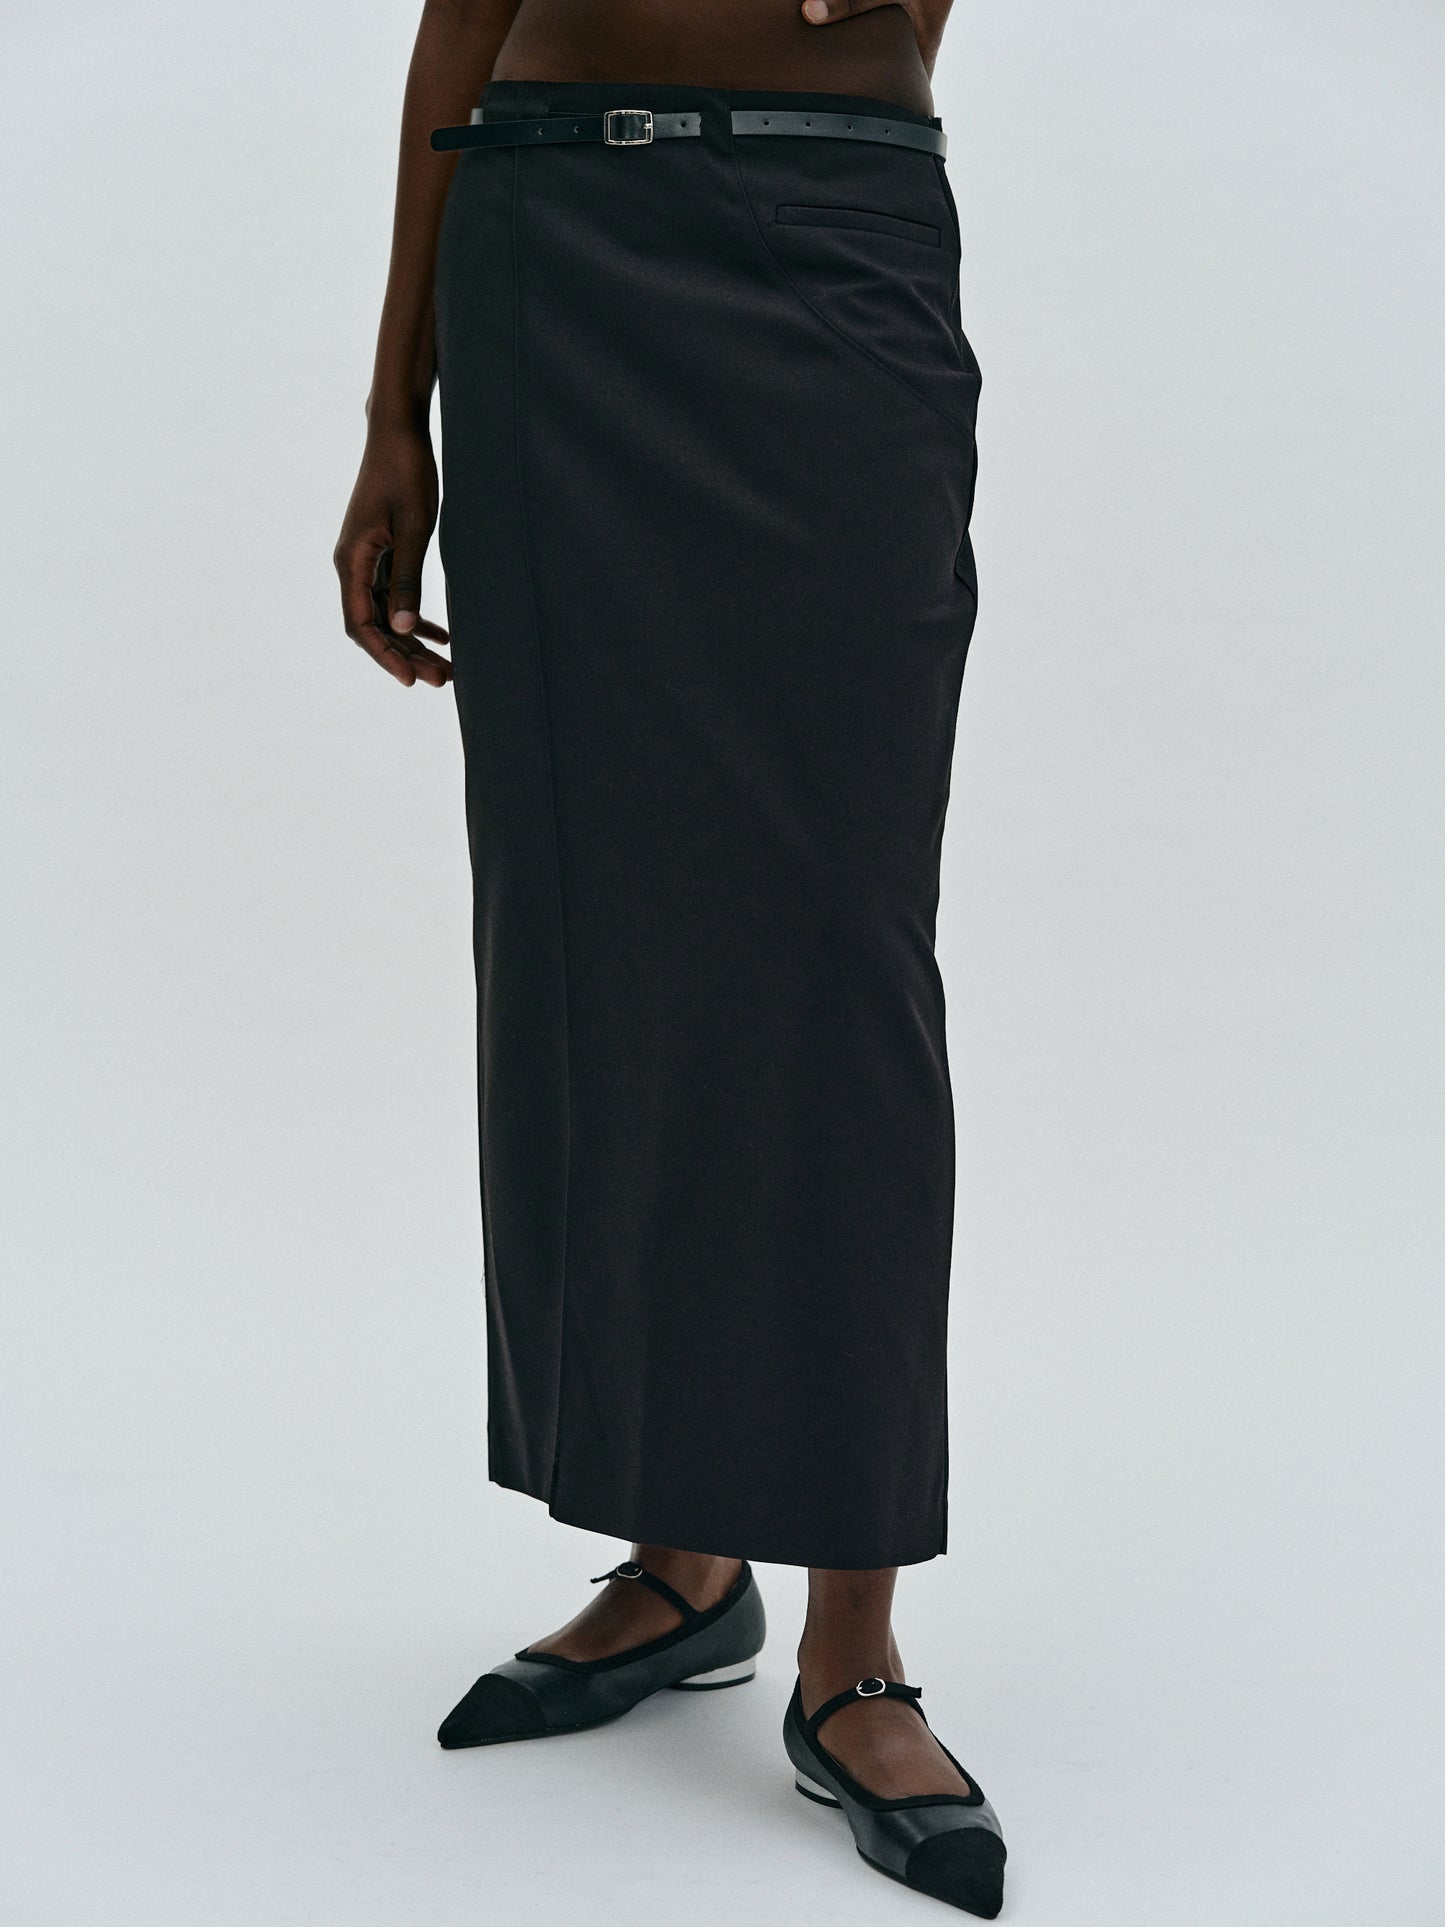 Belted Suit Long Skirt, Black